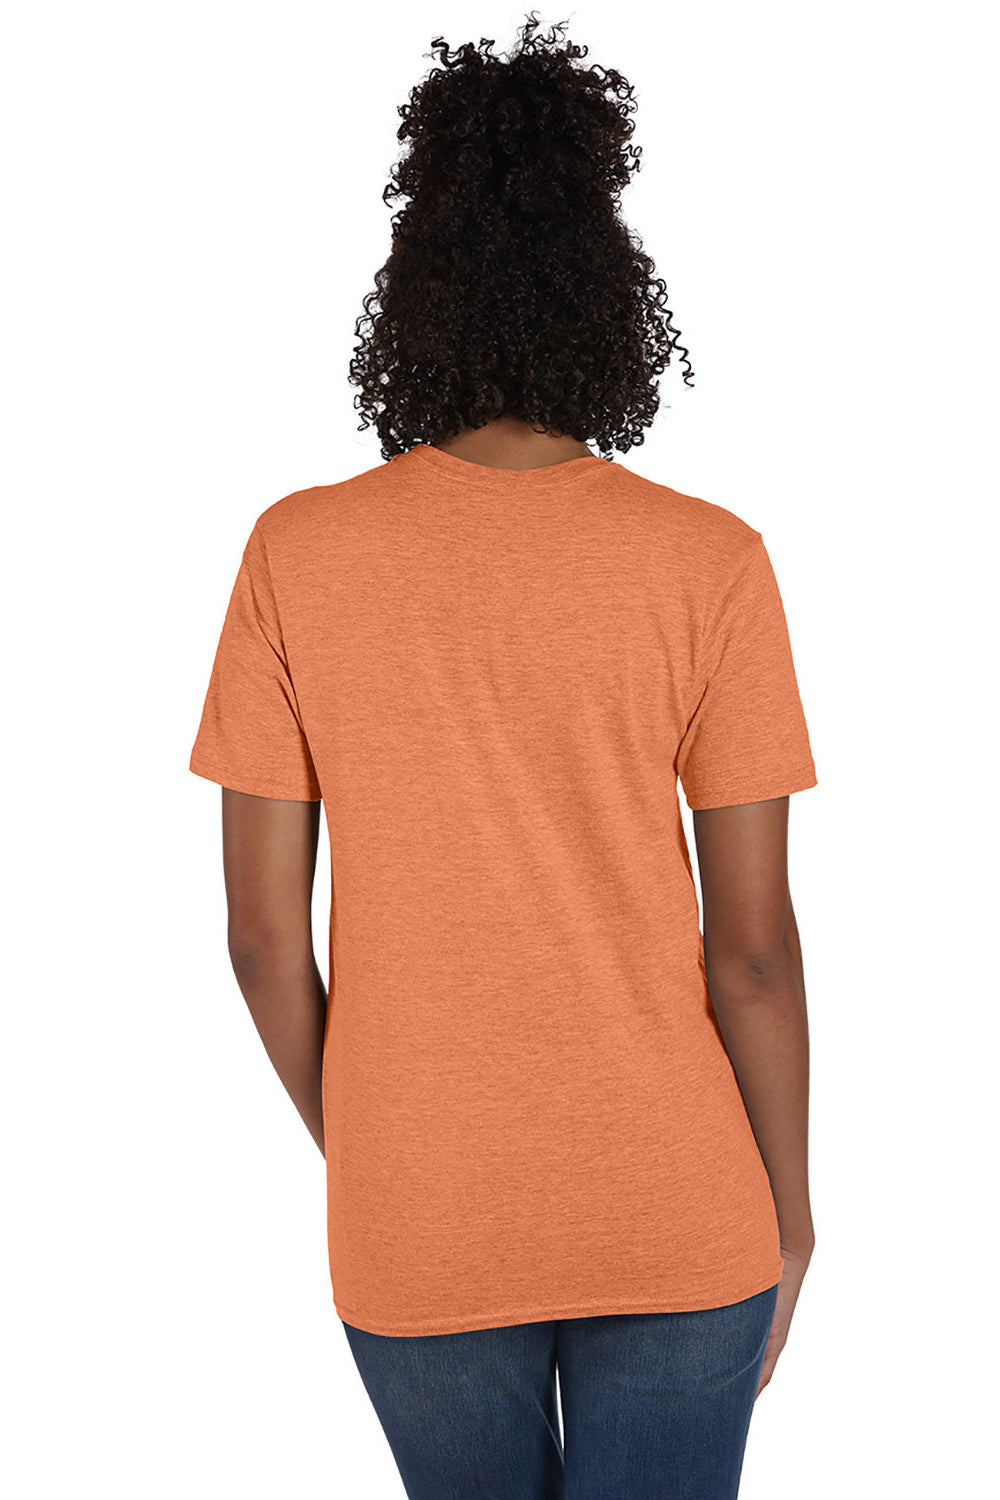 Hanes 4980 Mens Nano-T Short Sleeve Crewneck T-Shirt Heather Pumpkin Orange Back